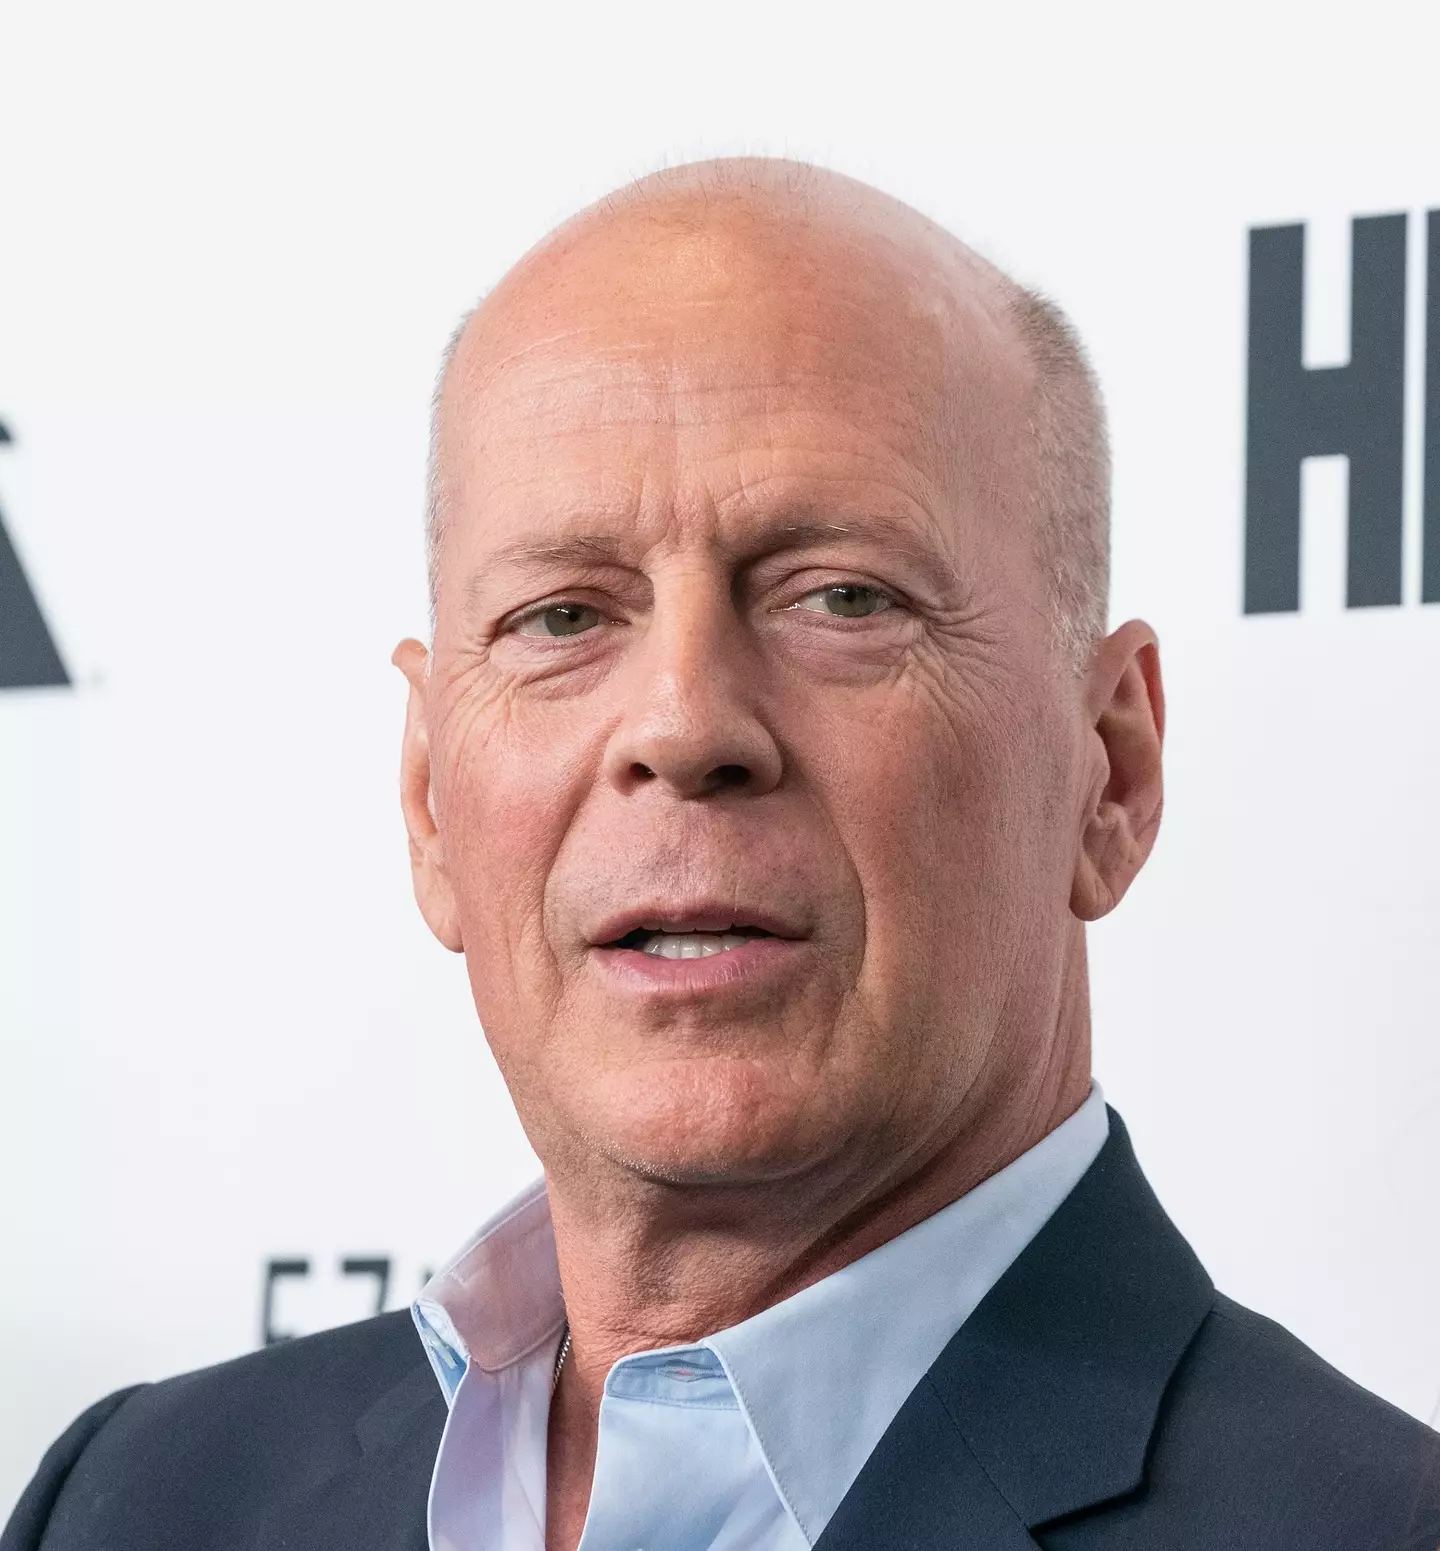 Bruce Willis stars in the film.